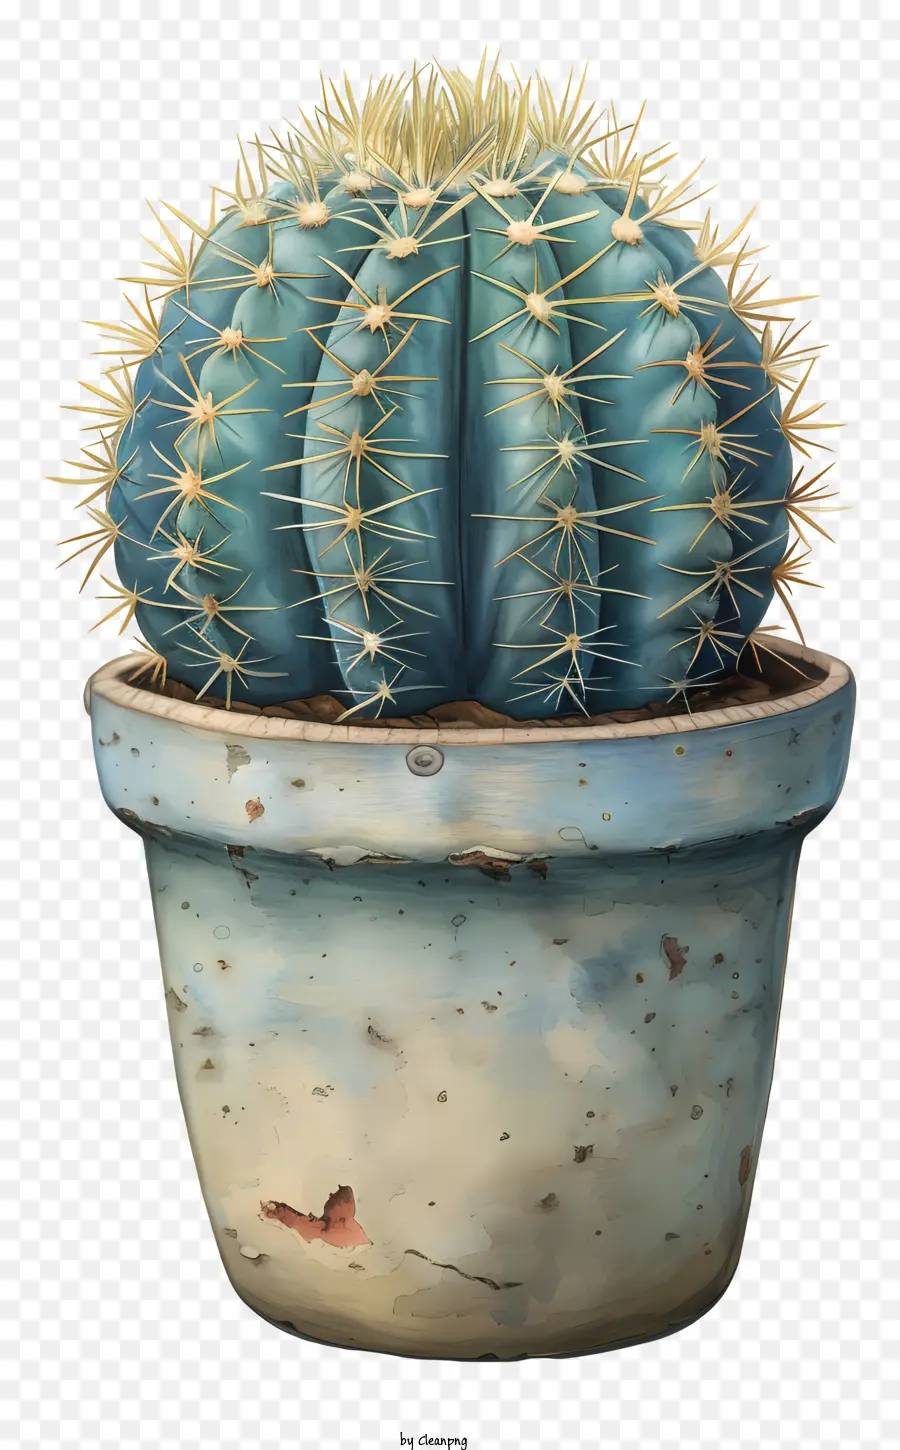 Kaktus - Kleiner Kaktus im Tontopf, Aquarellstil